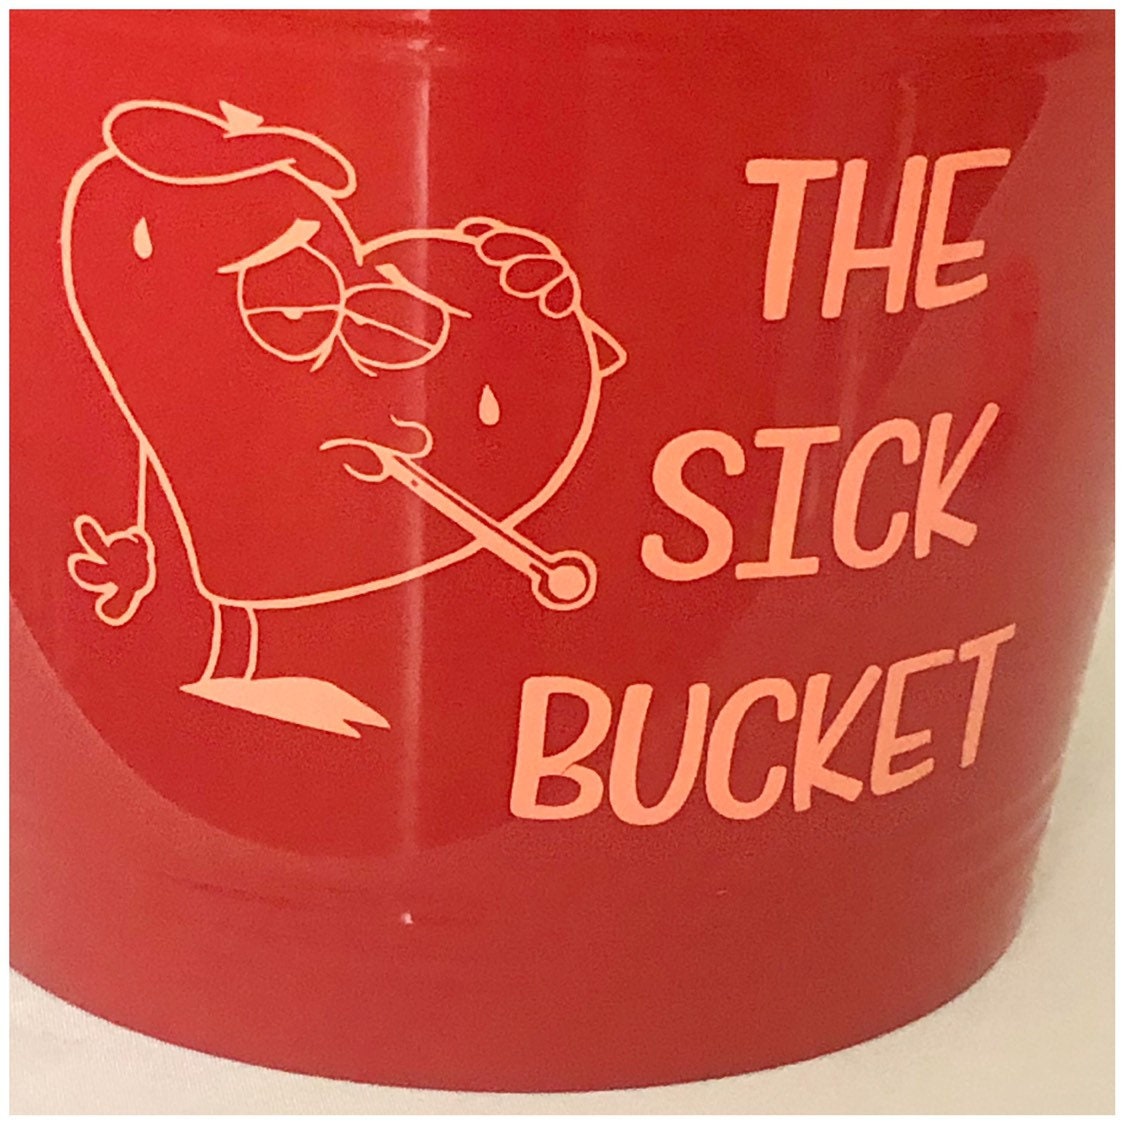 puke bucket, Other, The Patented Puke Bucket